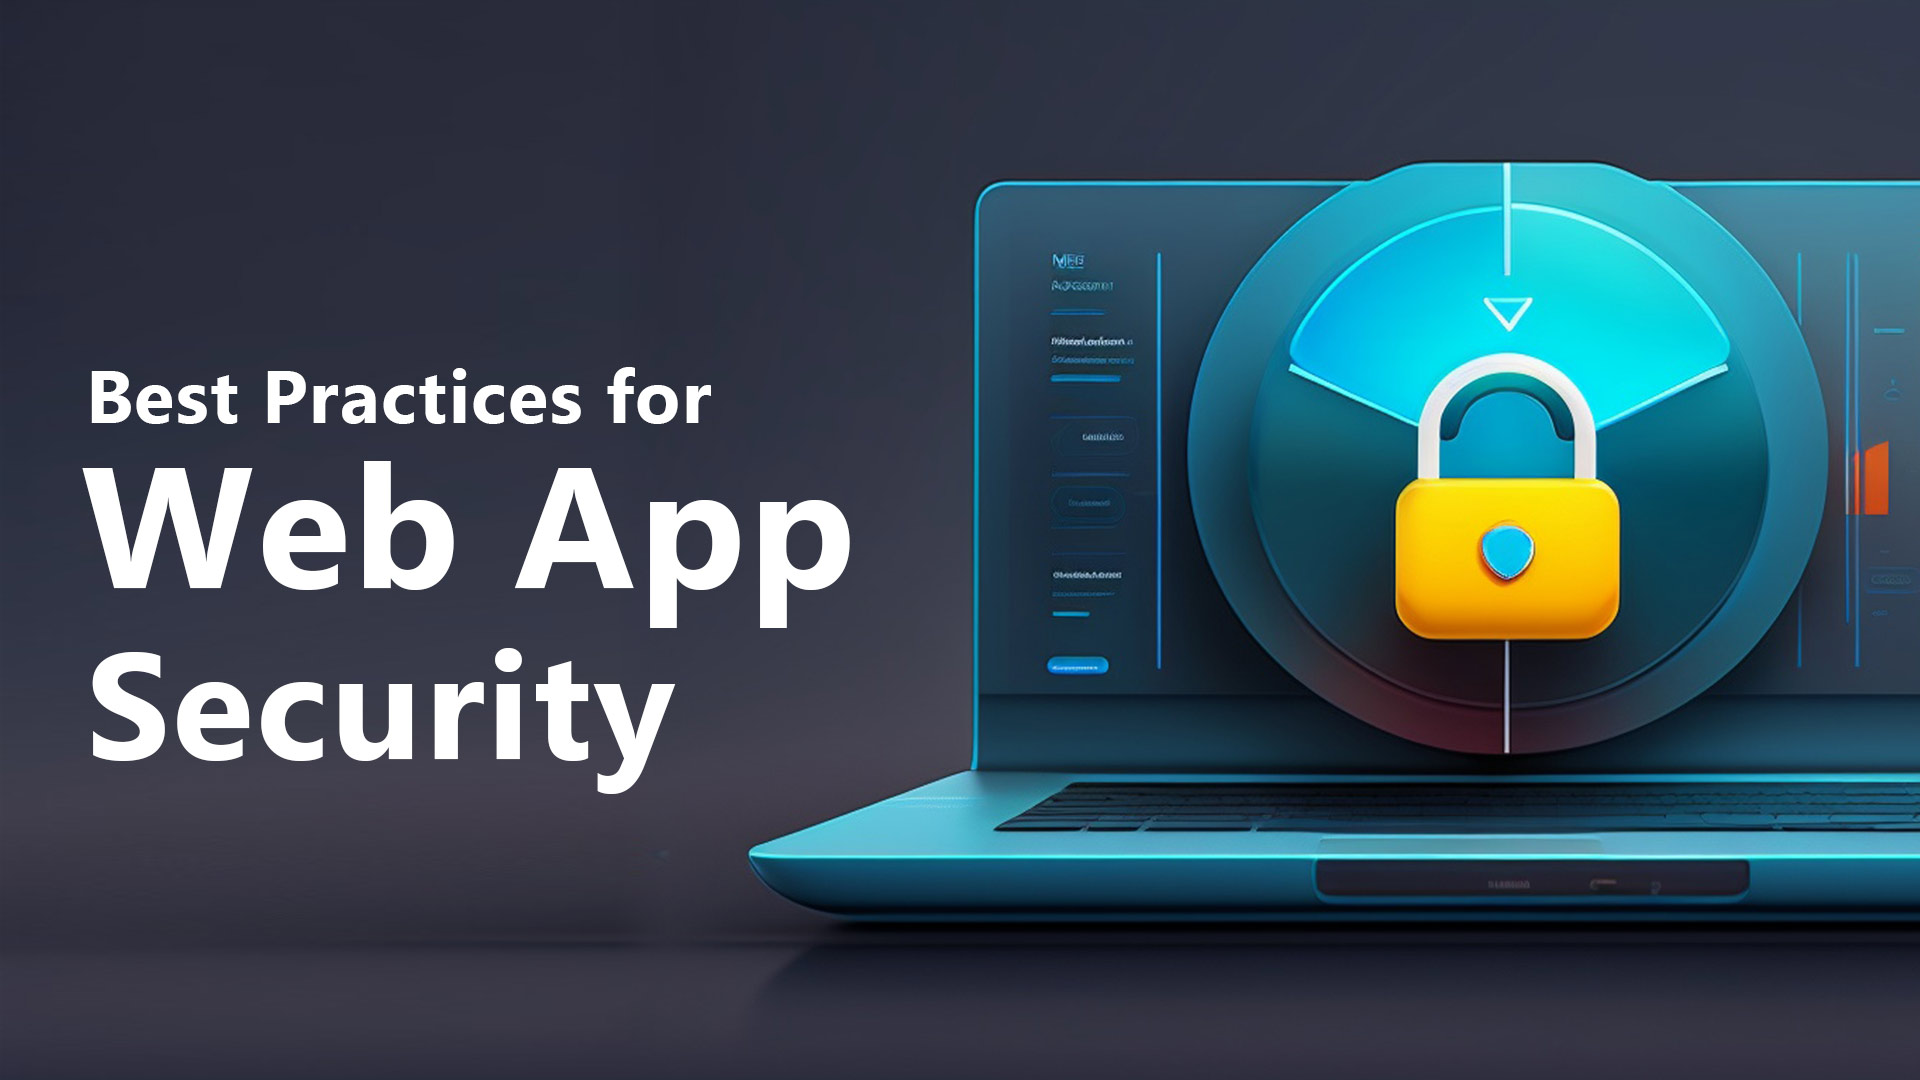 Web app security practices